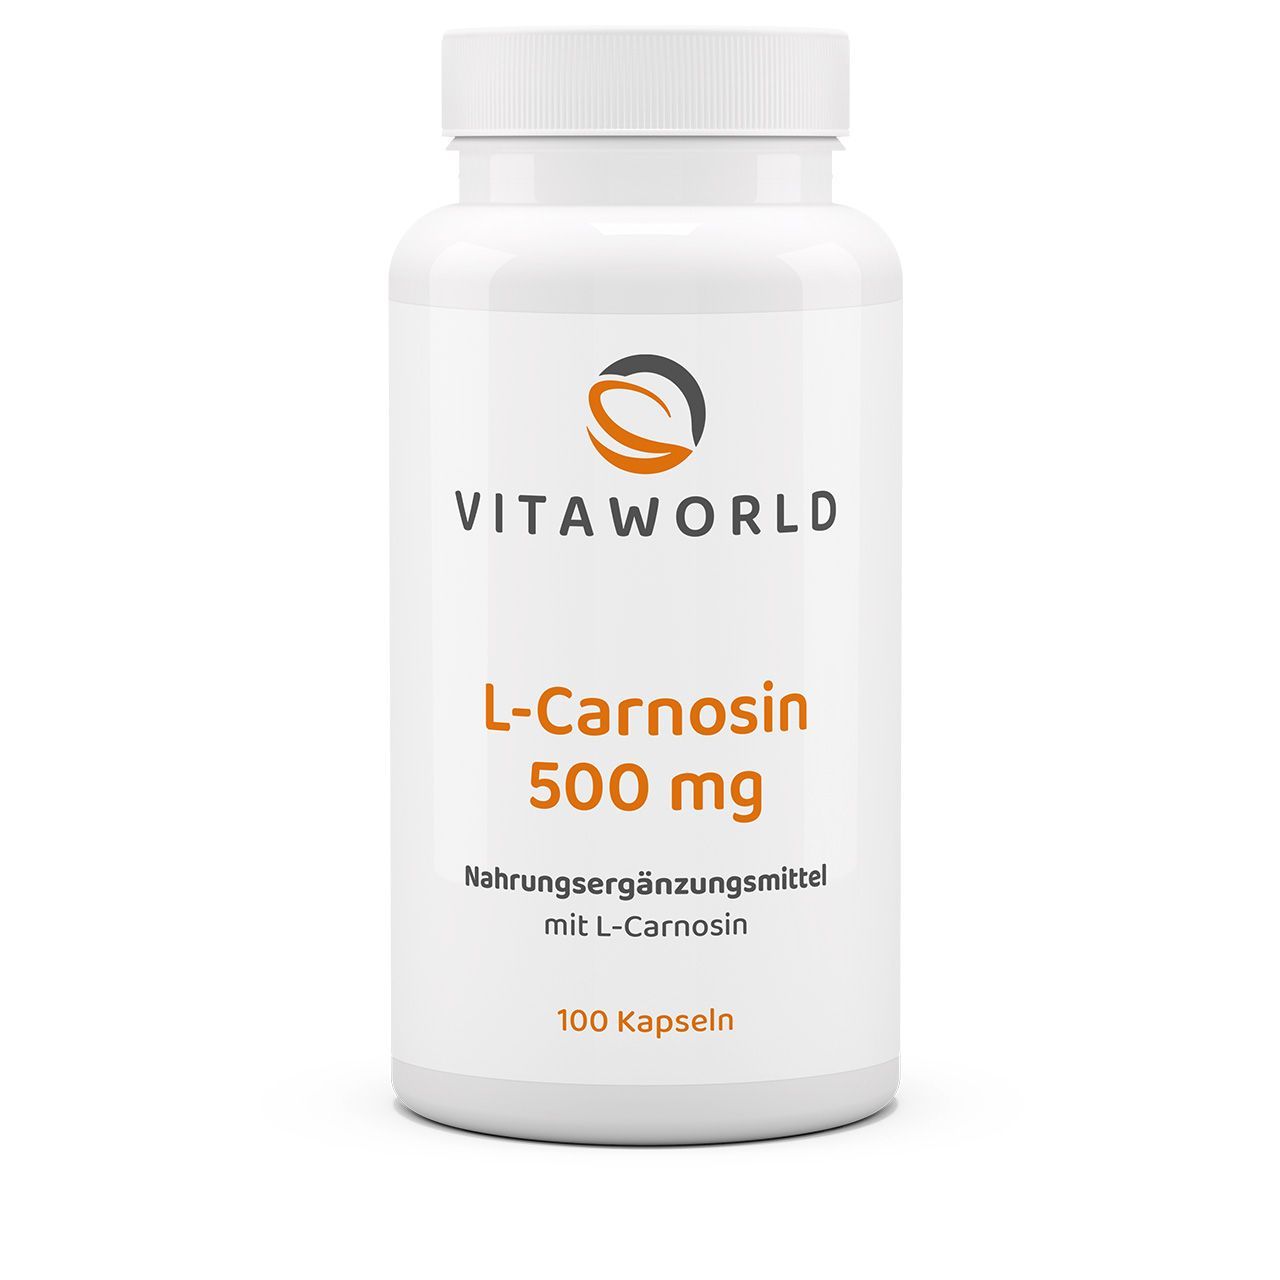 Vitaworld L-Carnosin 500 mg | 100 Kapseln | Apotheken Herstellung | vegan | gluten- und laktosefrei